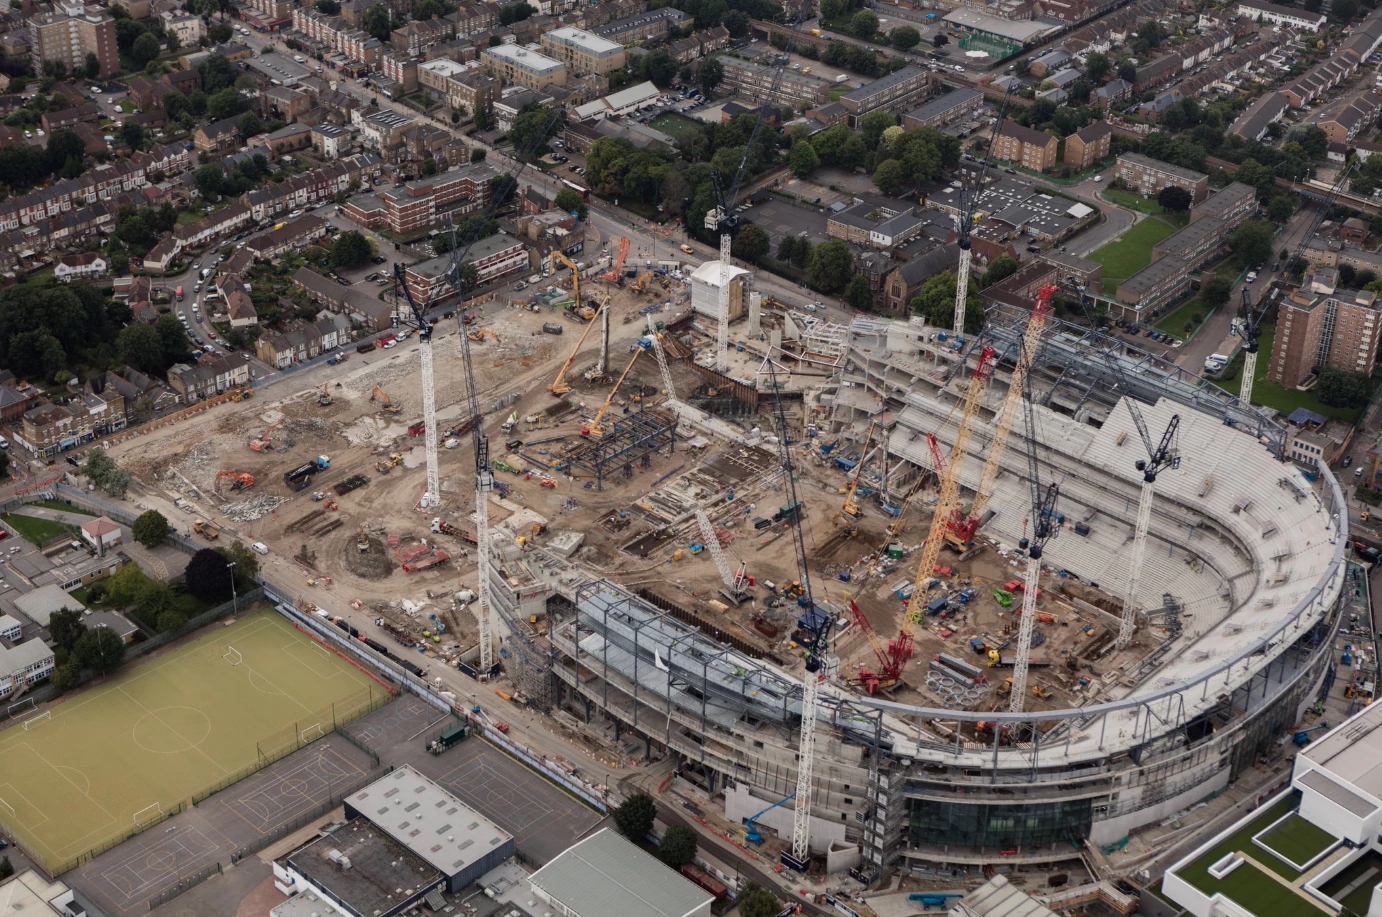 Latest images from Tottenham Hotspur's new stadium development.